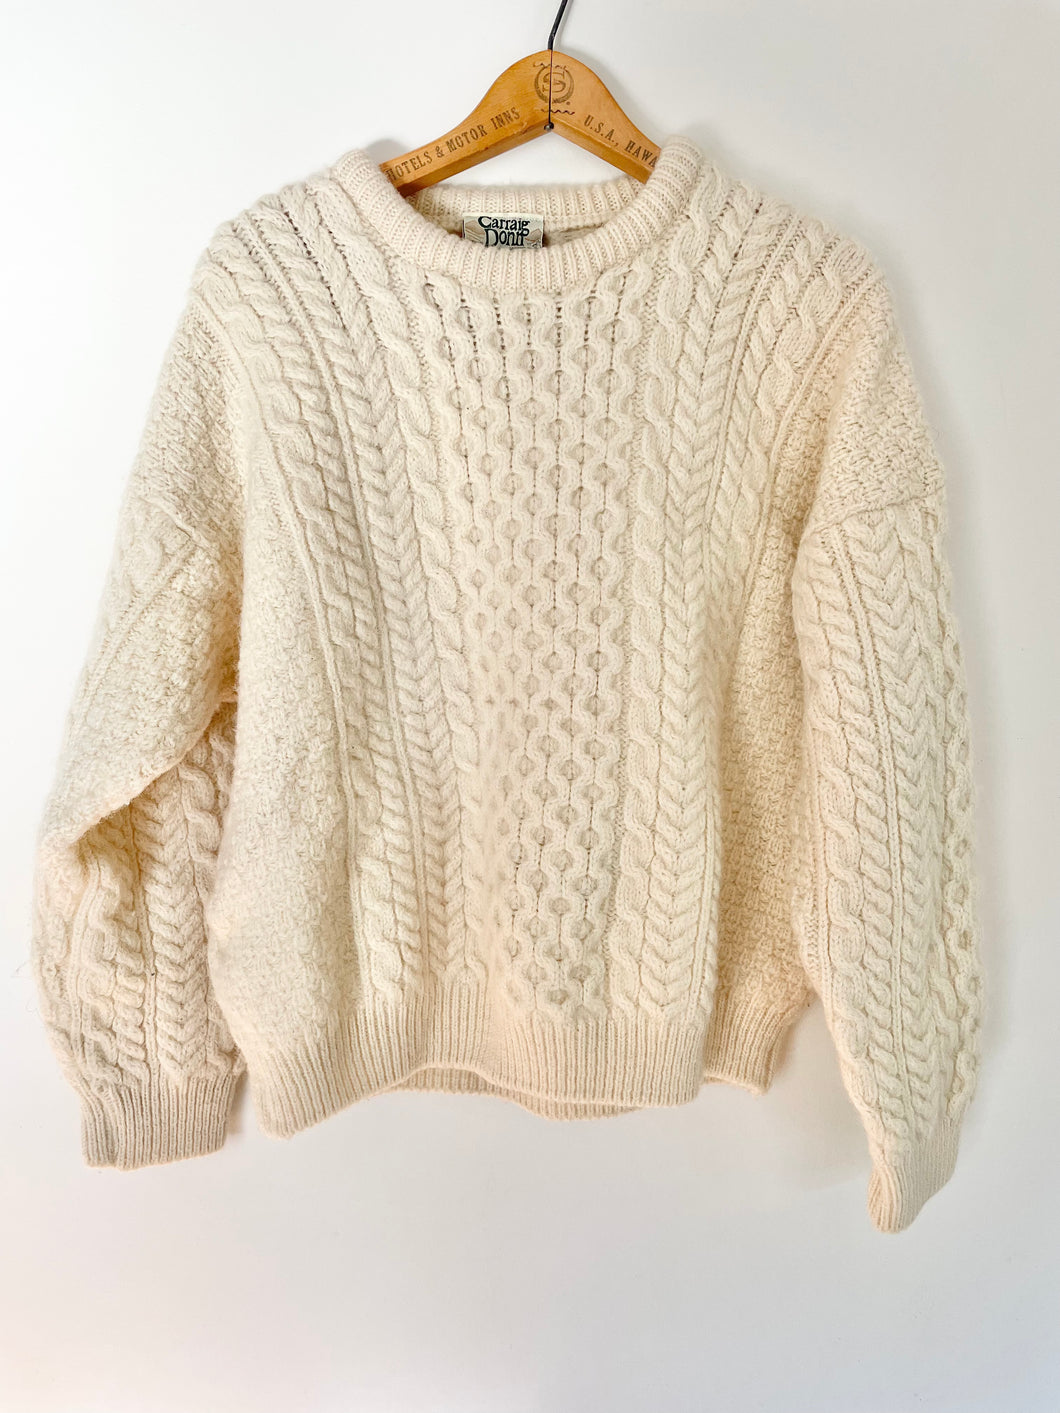 irish knit sweater carraig donn